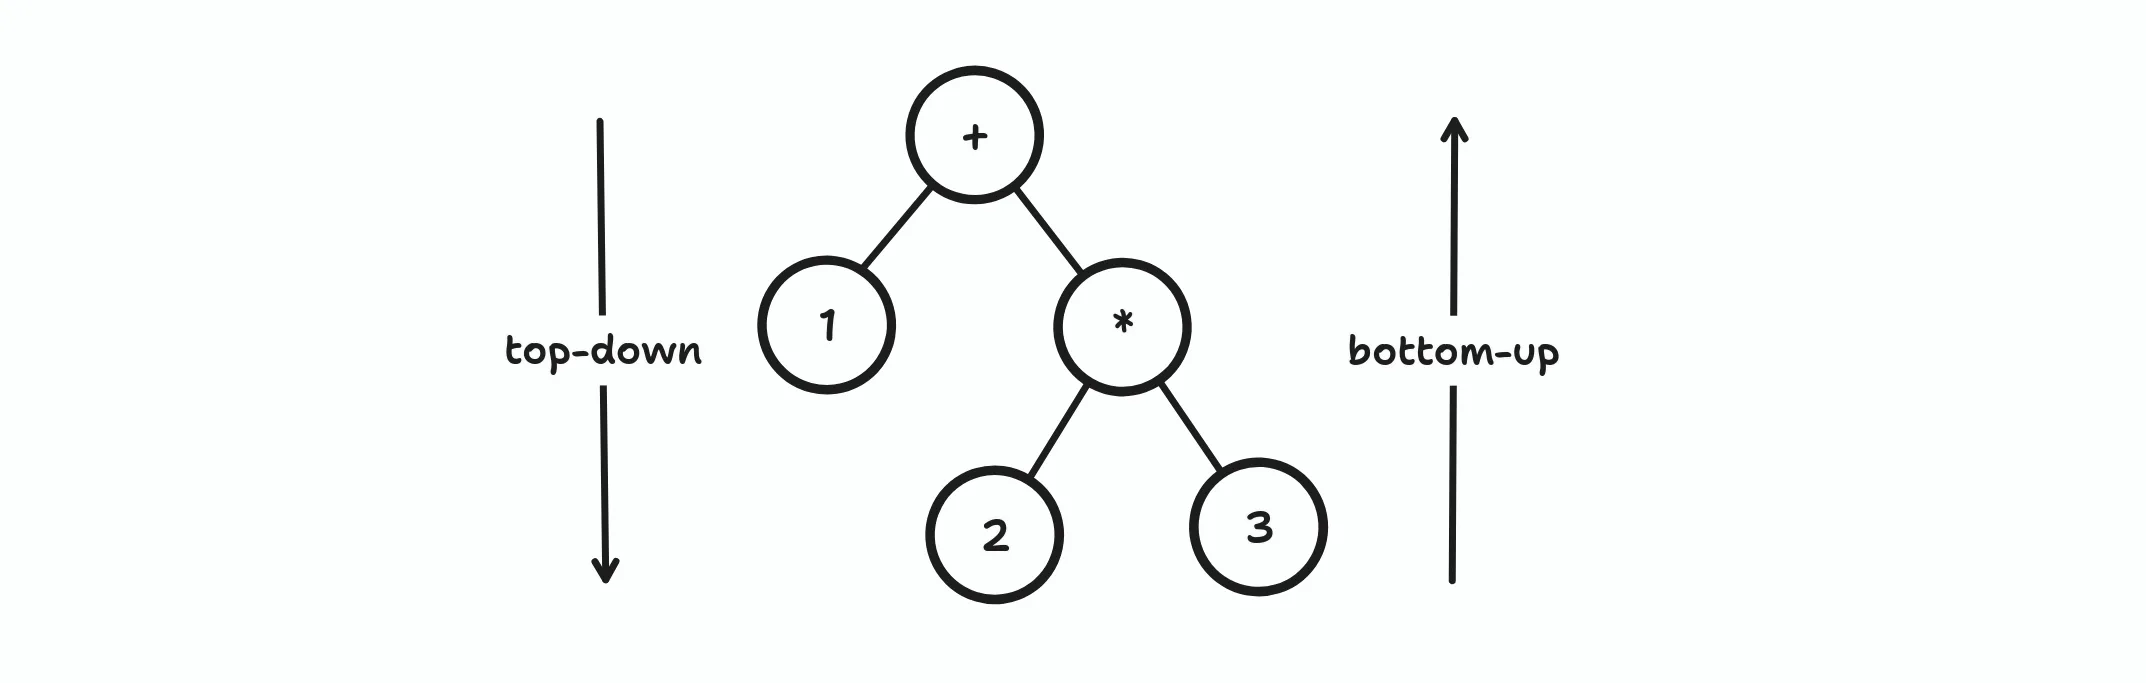 Math expression as tree diagram